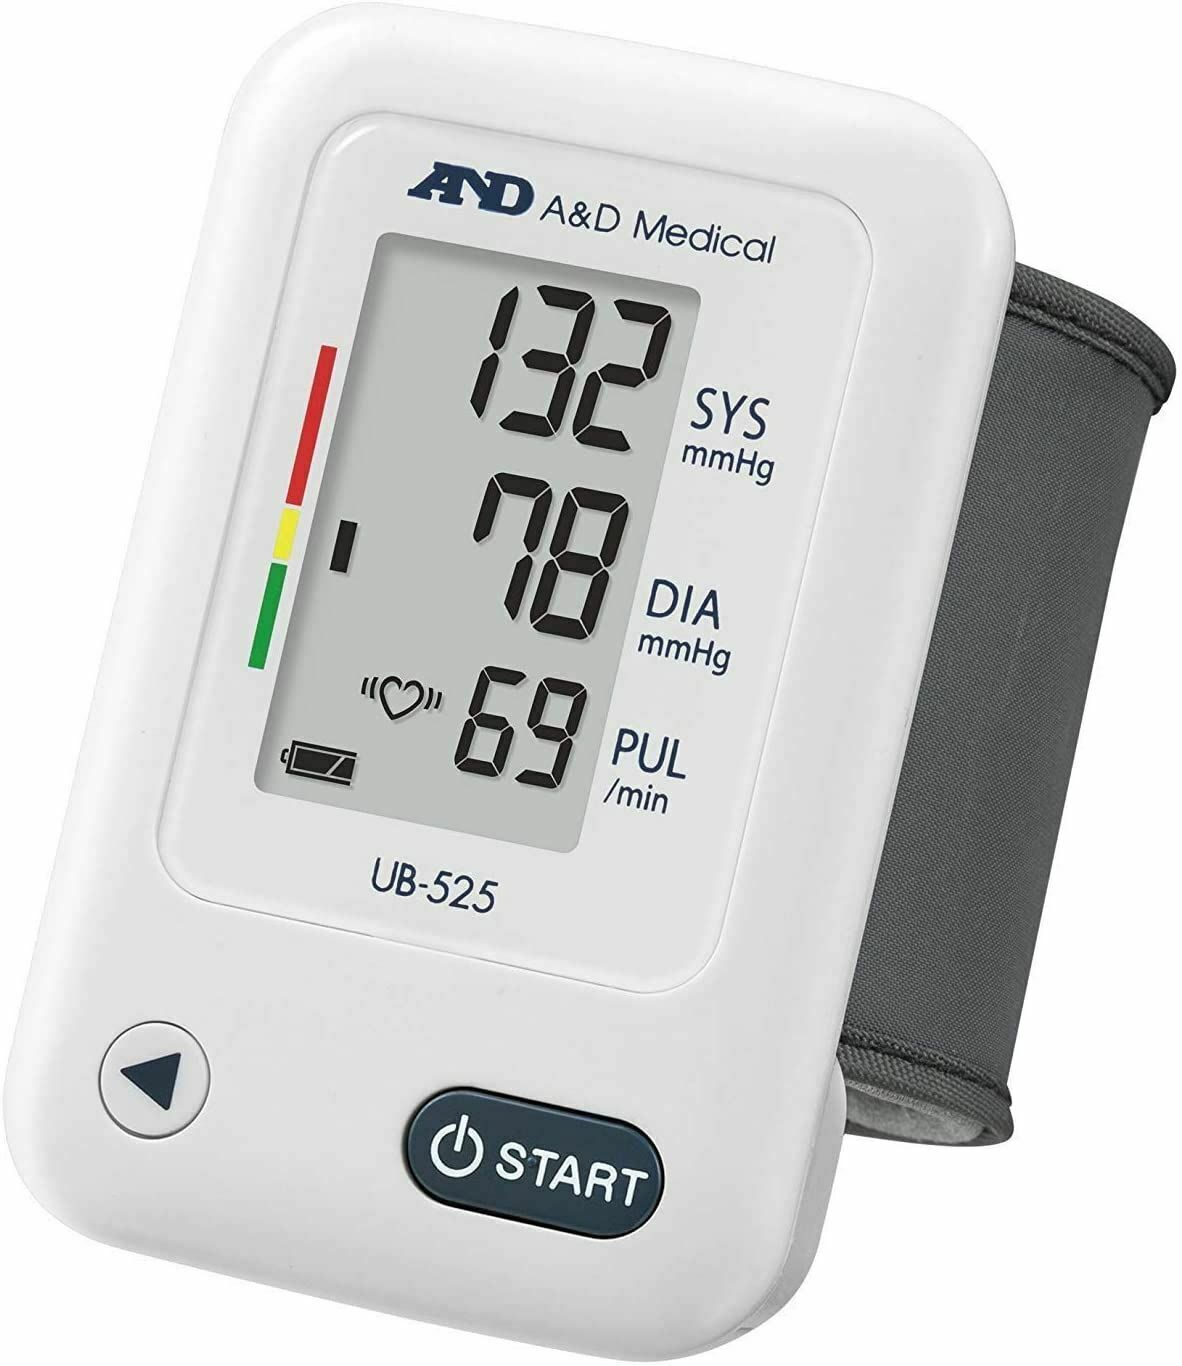 AND UB525 Auto Wrist Blood Pressure Monitor 60 Readings IHB Detector